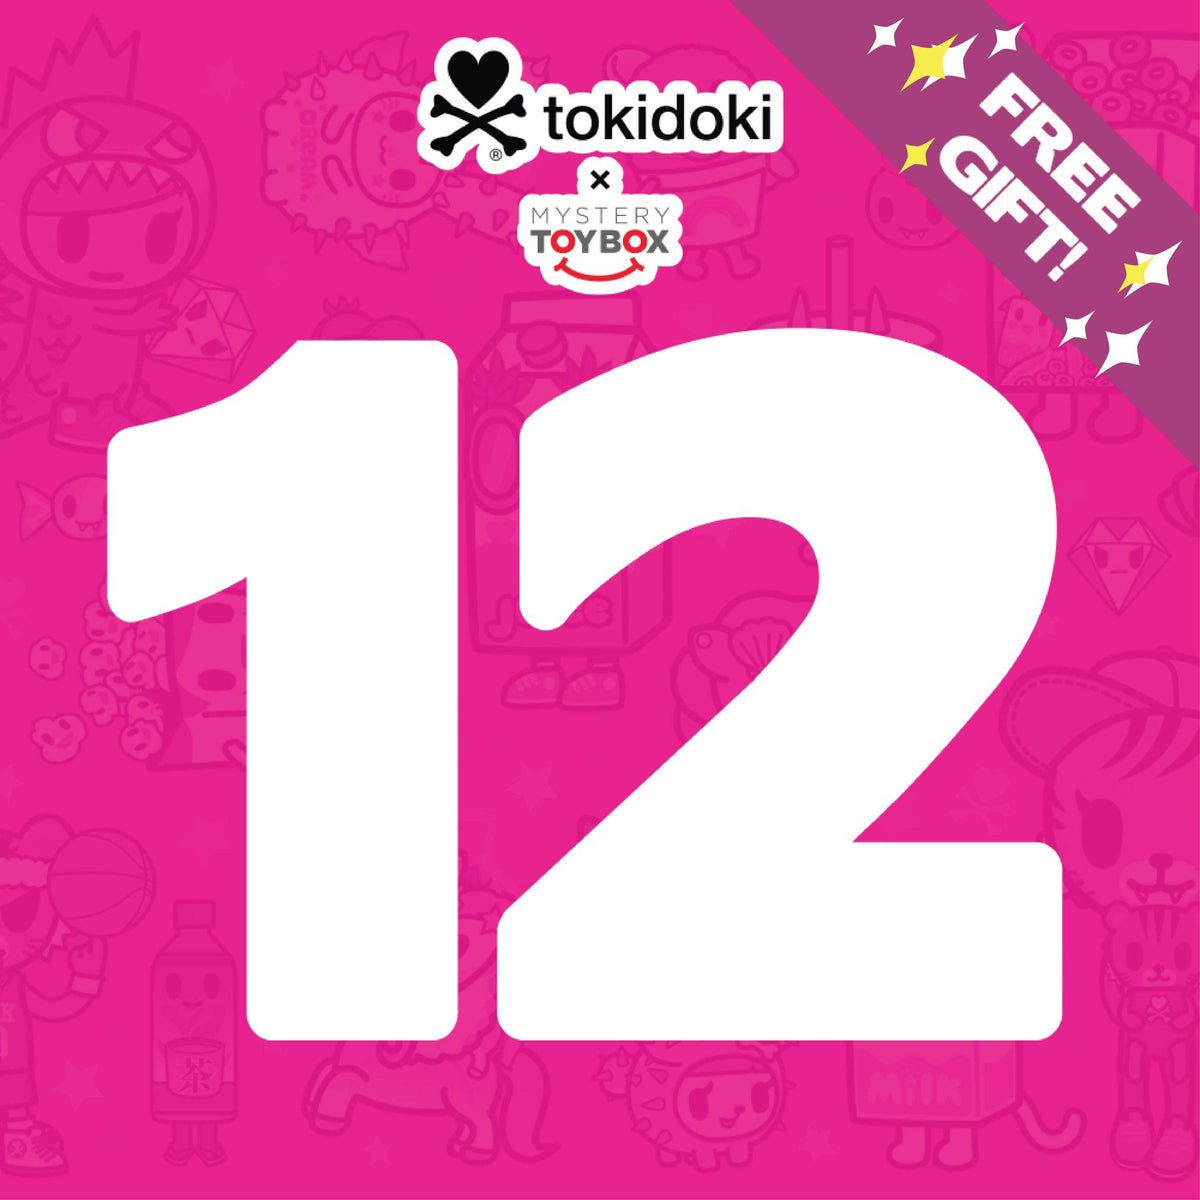 tokidoki Mystery Toy Box subscription - 12 Month Plan